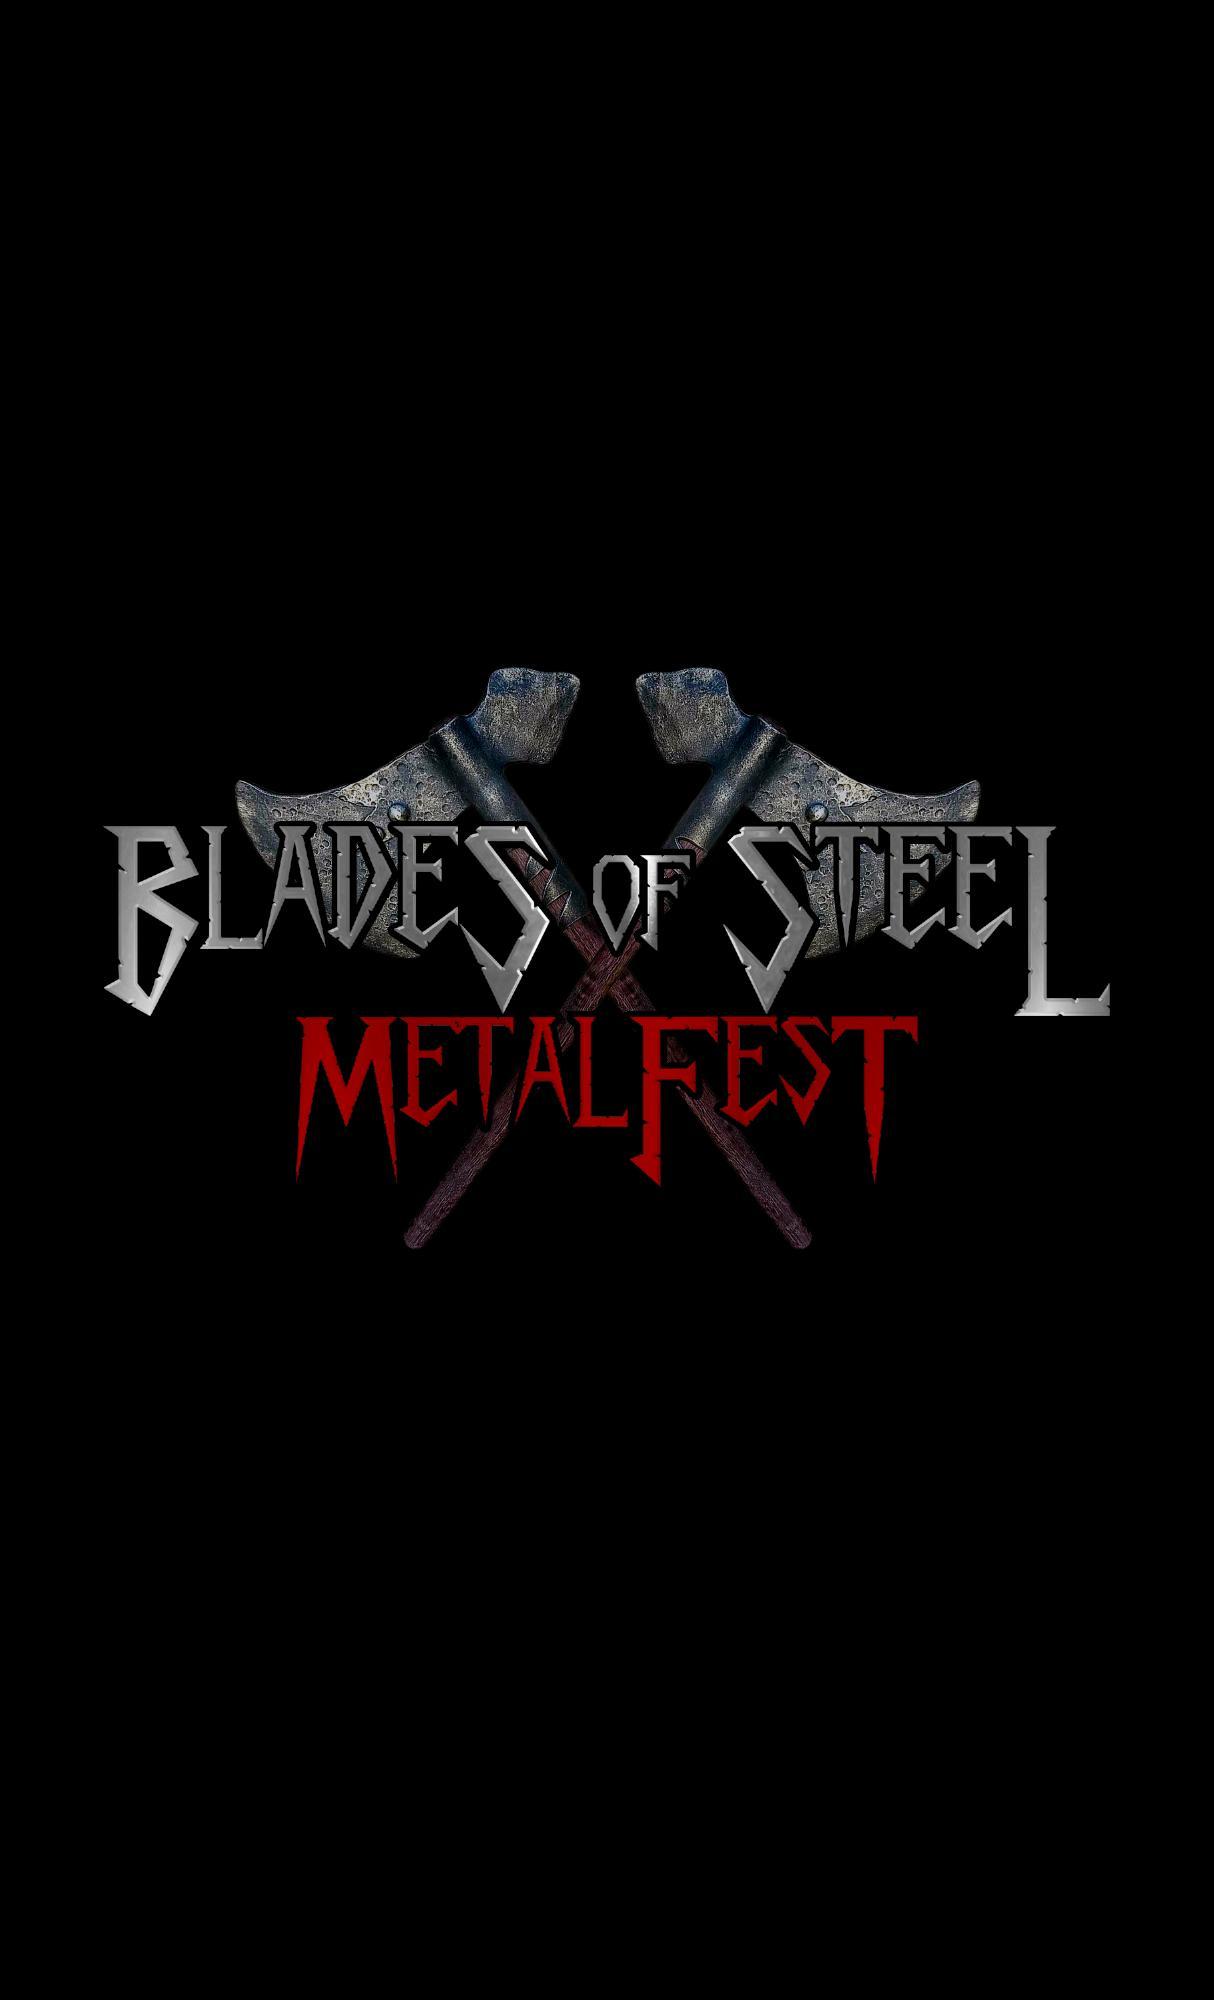 Blades of Steel Metalfest